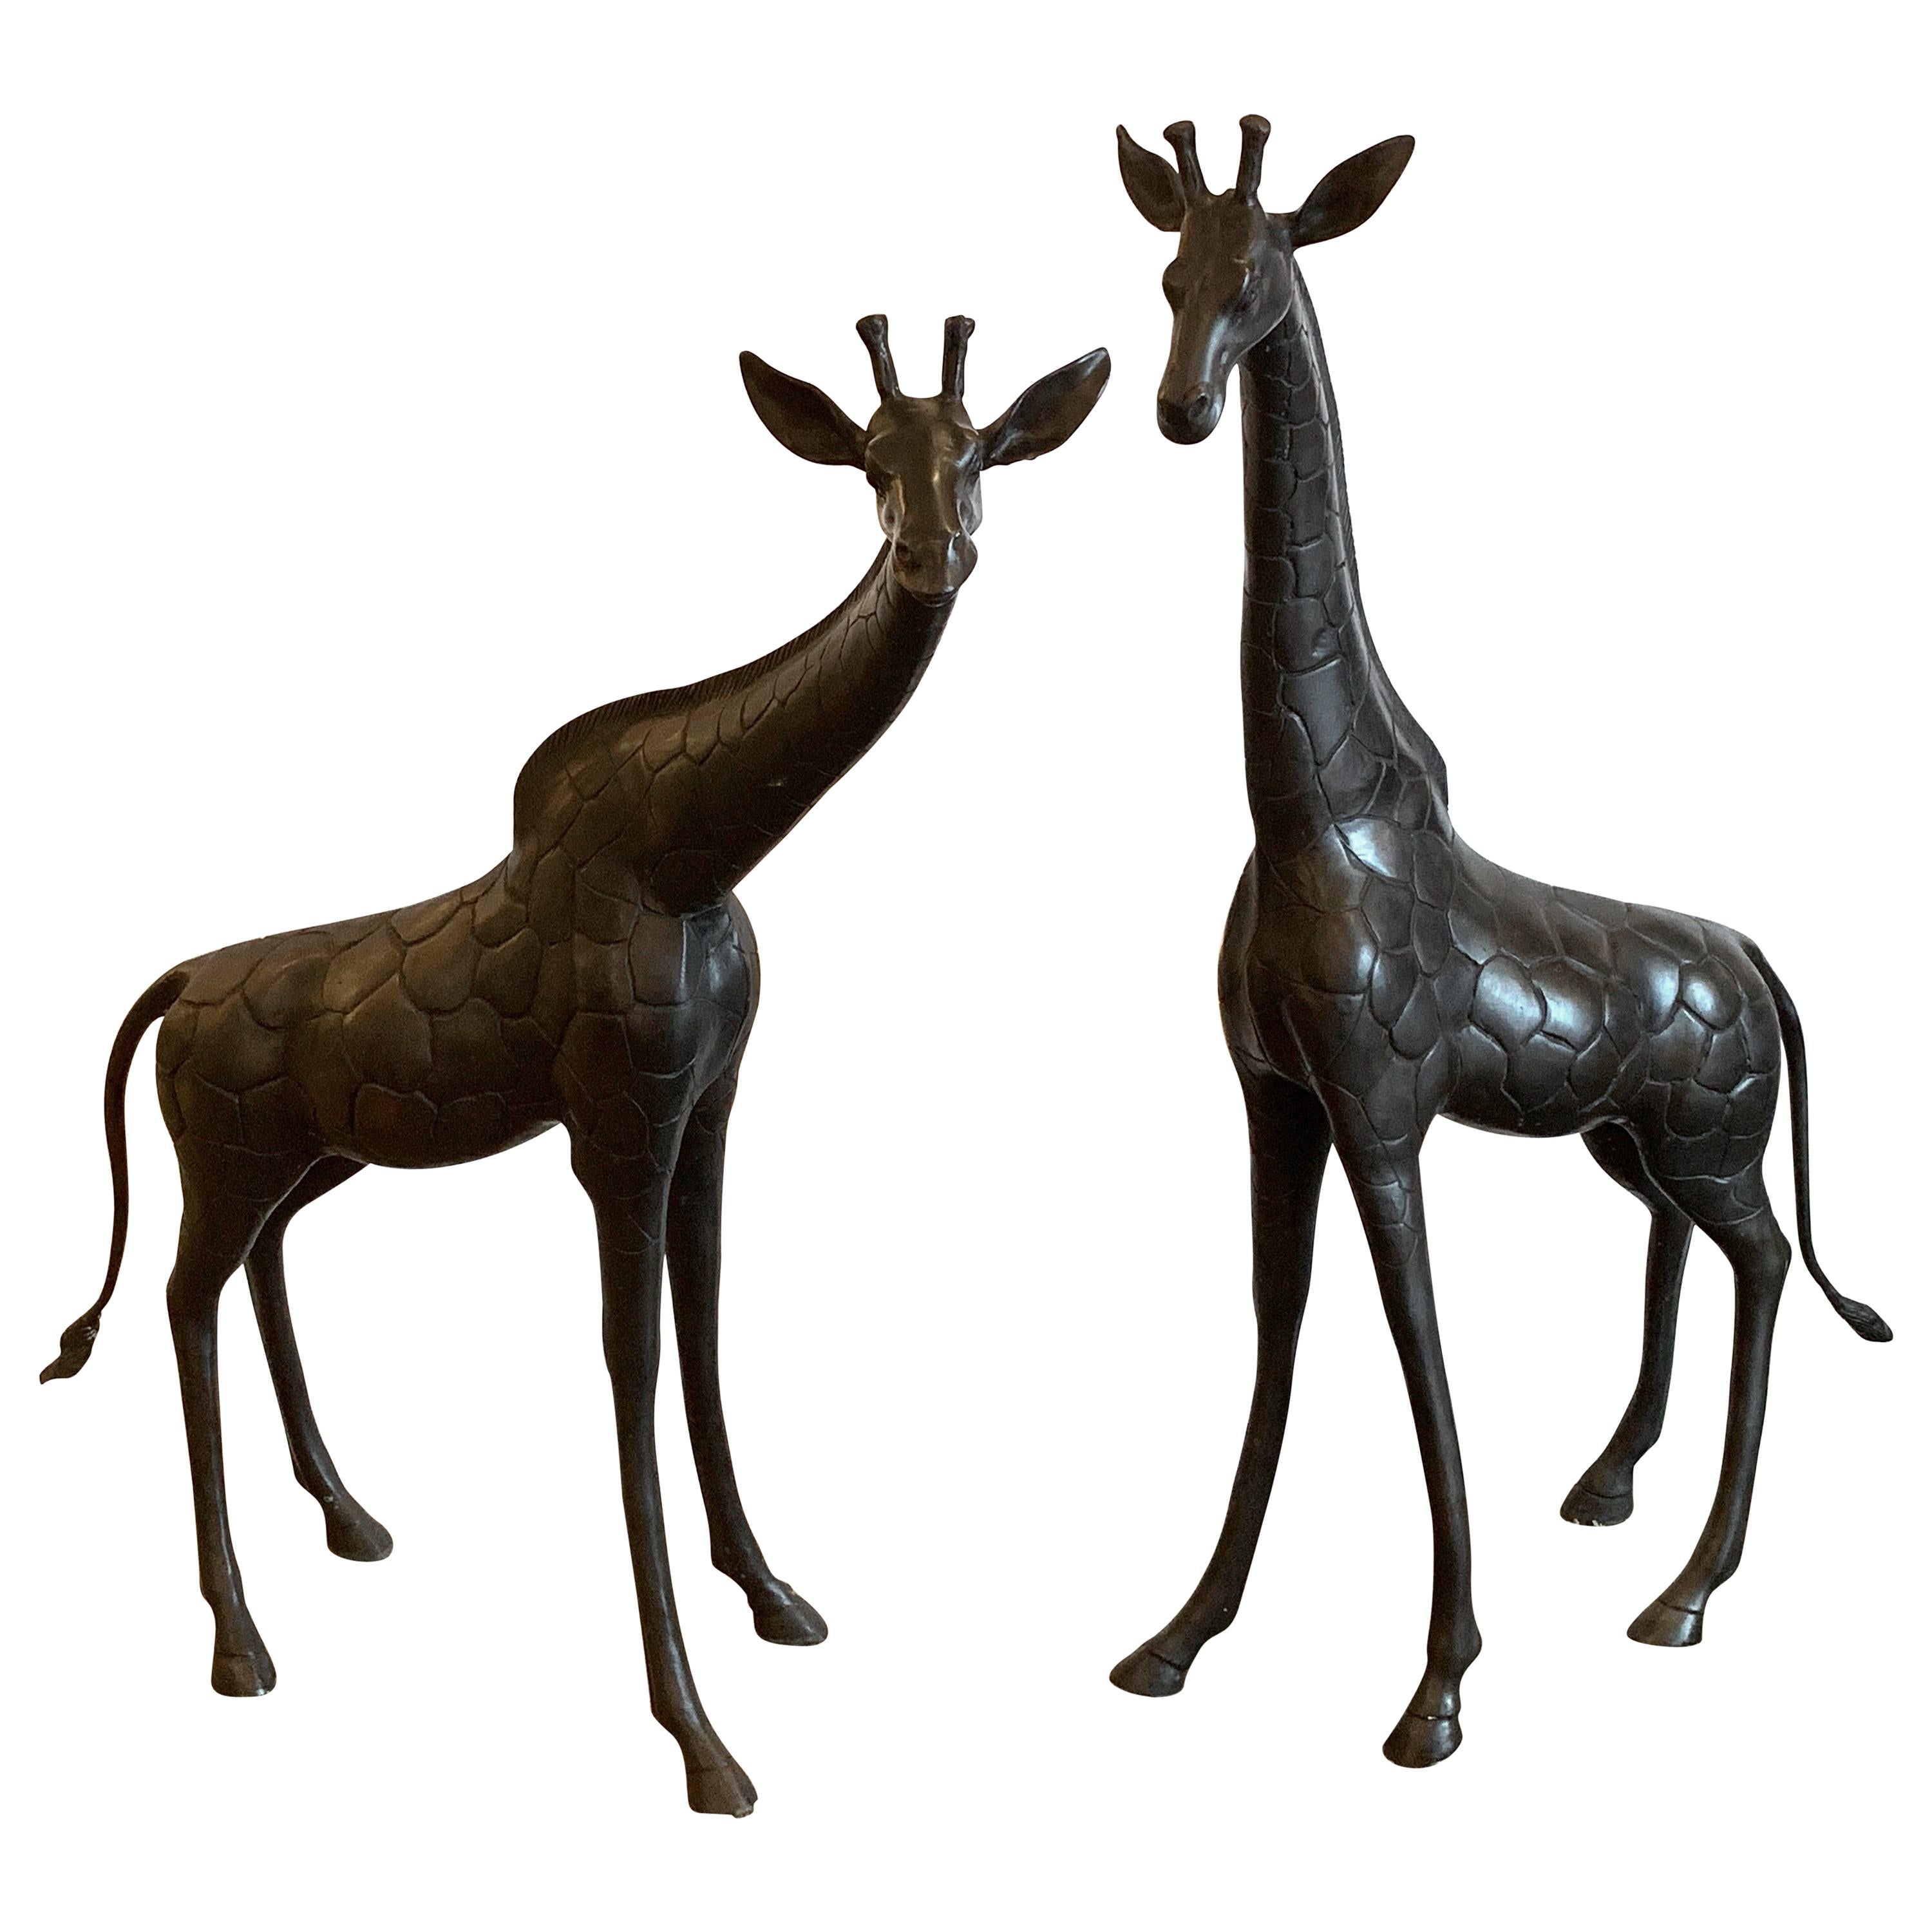 Two Large Bronze Sculptures of Giraffes